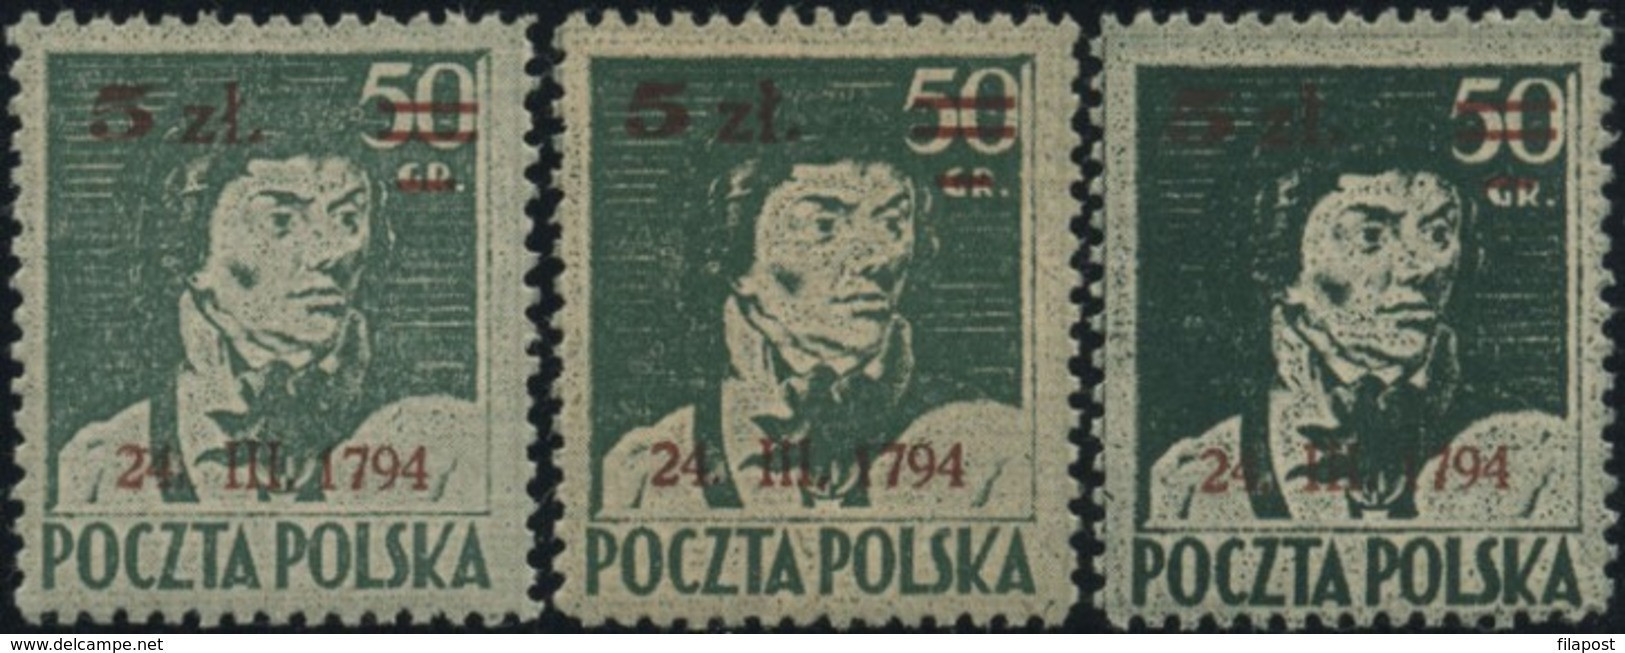 Poland 1945 Mi 398 A B C General T. Kosciuszko  Variety Of Colours Sign. Wysocki PZF ** - Unused Stamps